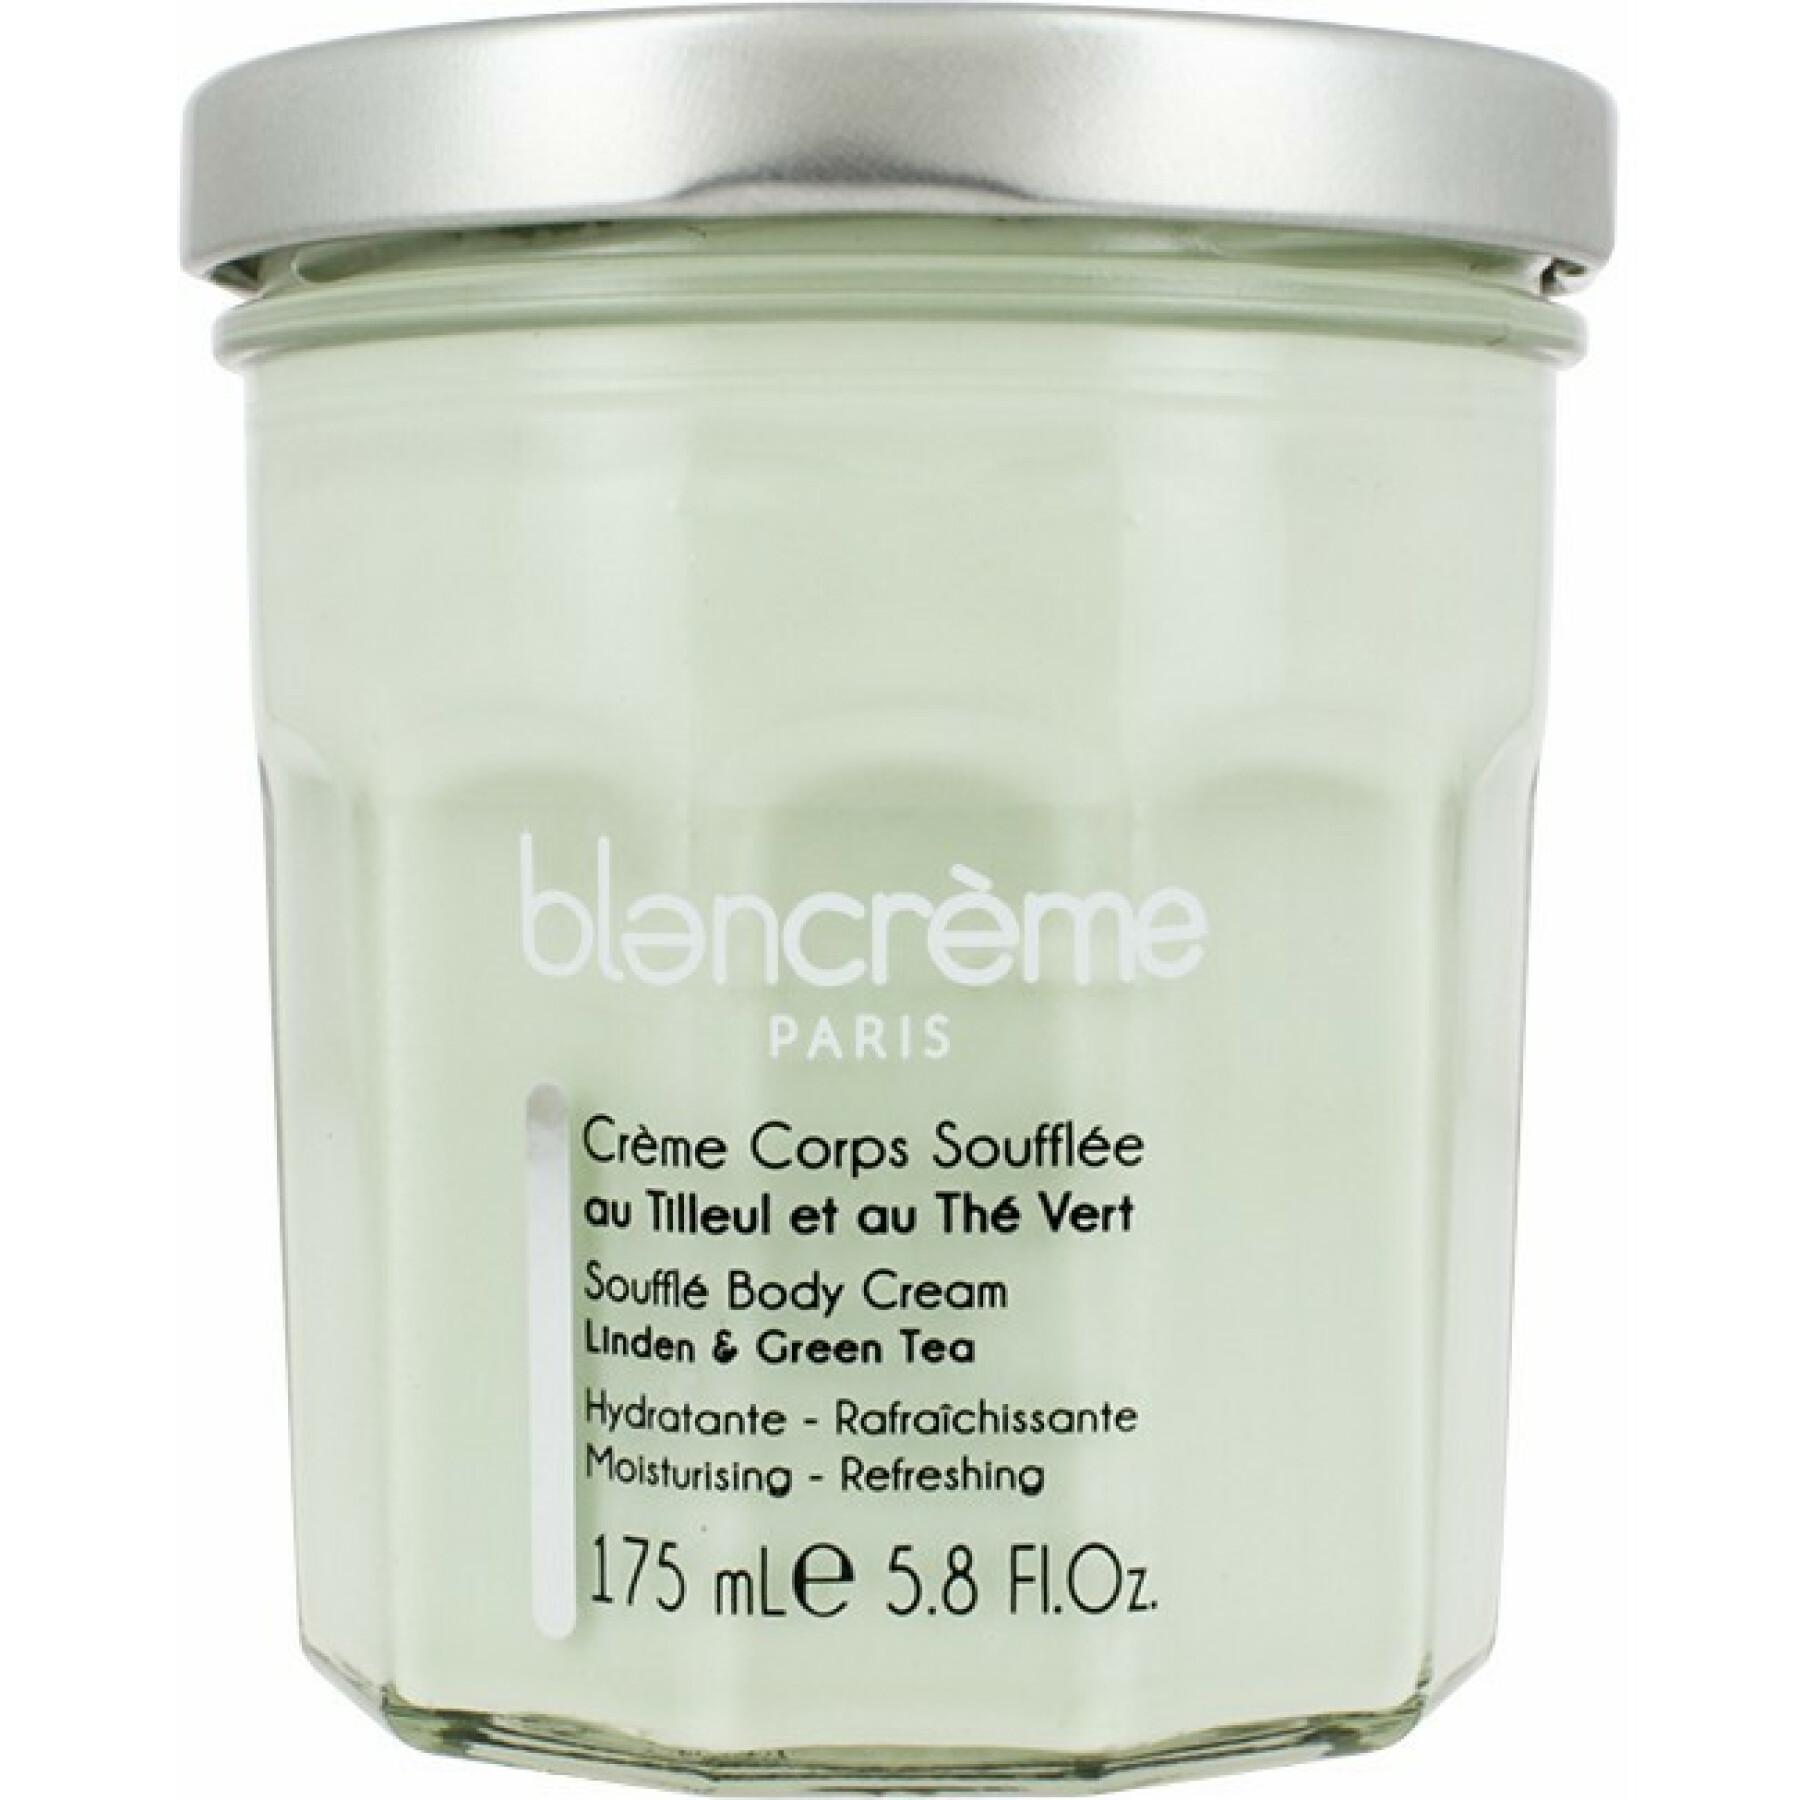 Body cream - lime & green tea - Blancreme 175 ml